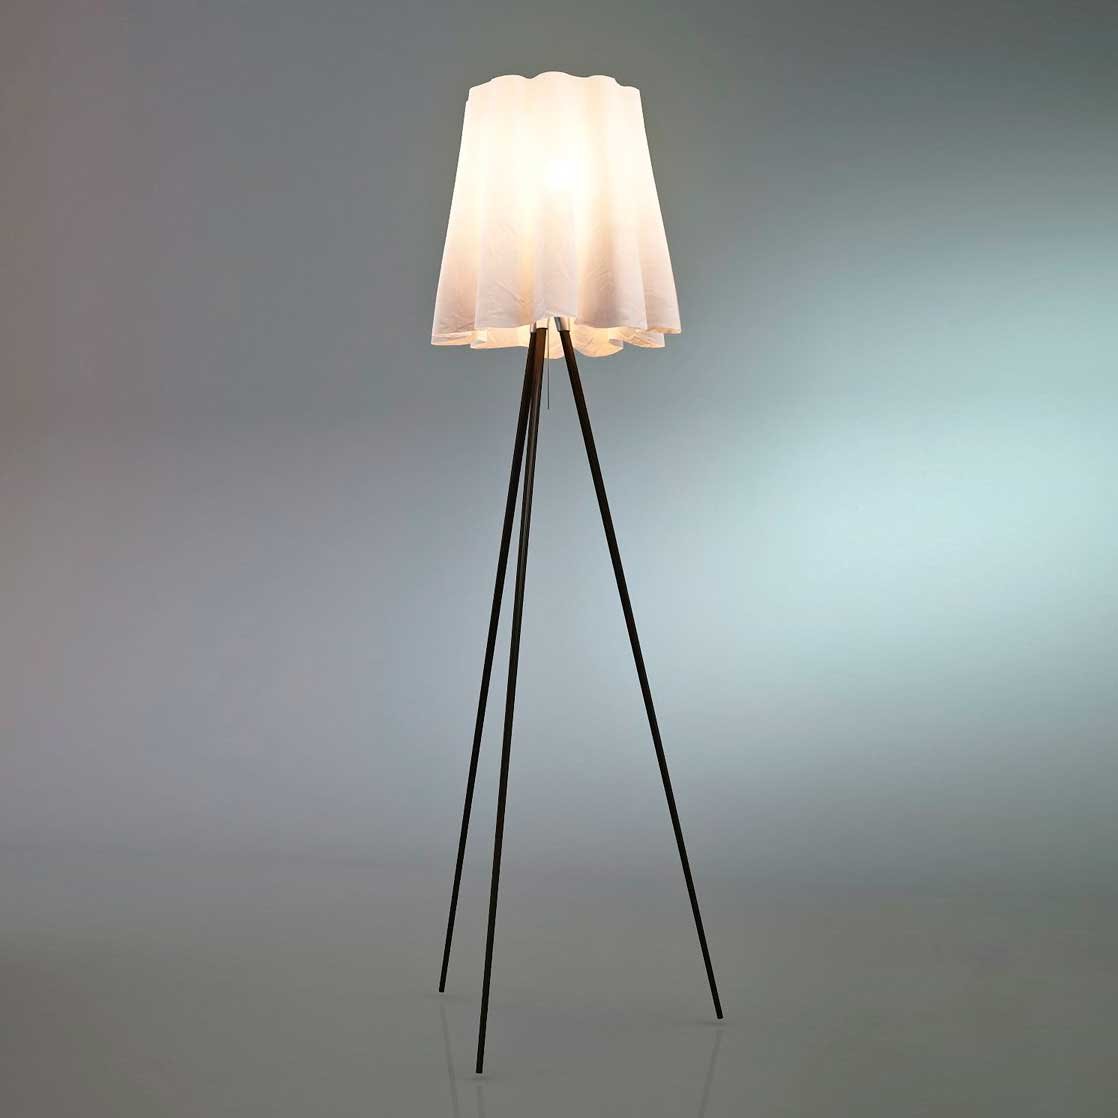 lampara de pie rosy angelis phillipe starck flos diseño italiano original iluminacion aguero buenos aires agentina